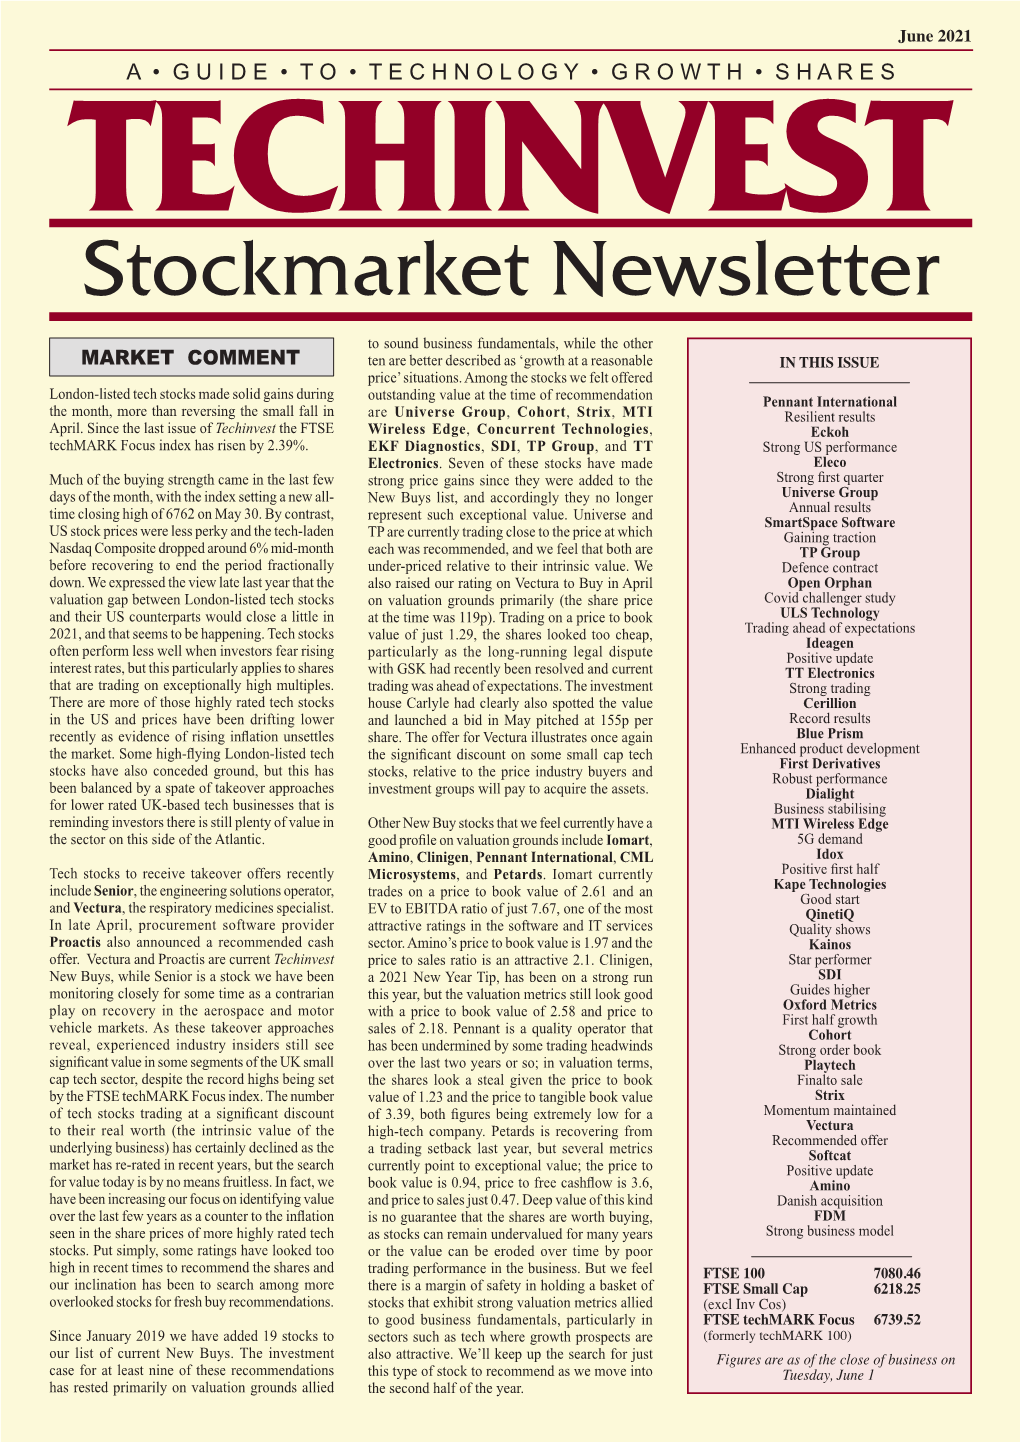 TECHINVEST Stockmarket Newsletter